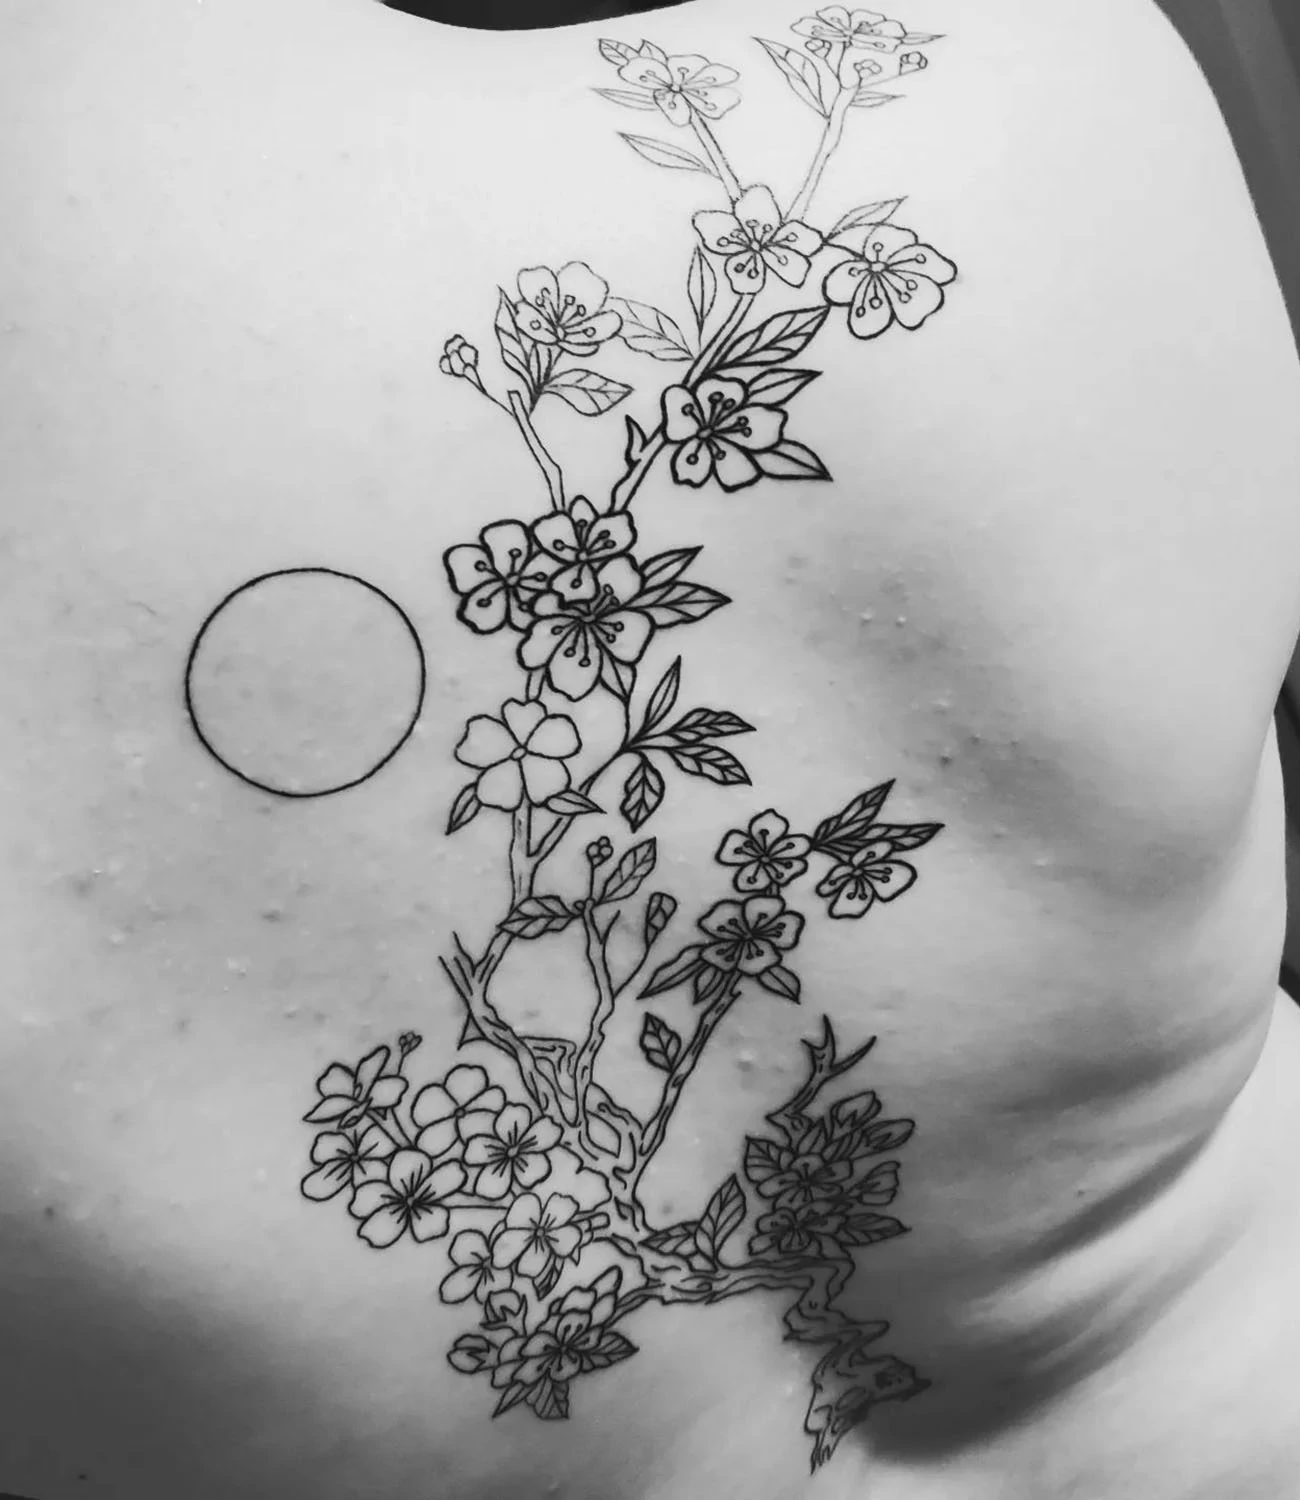 Cherry Blossom Spine Tattoo